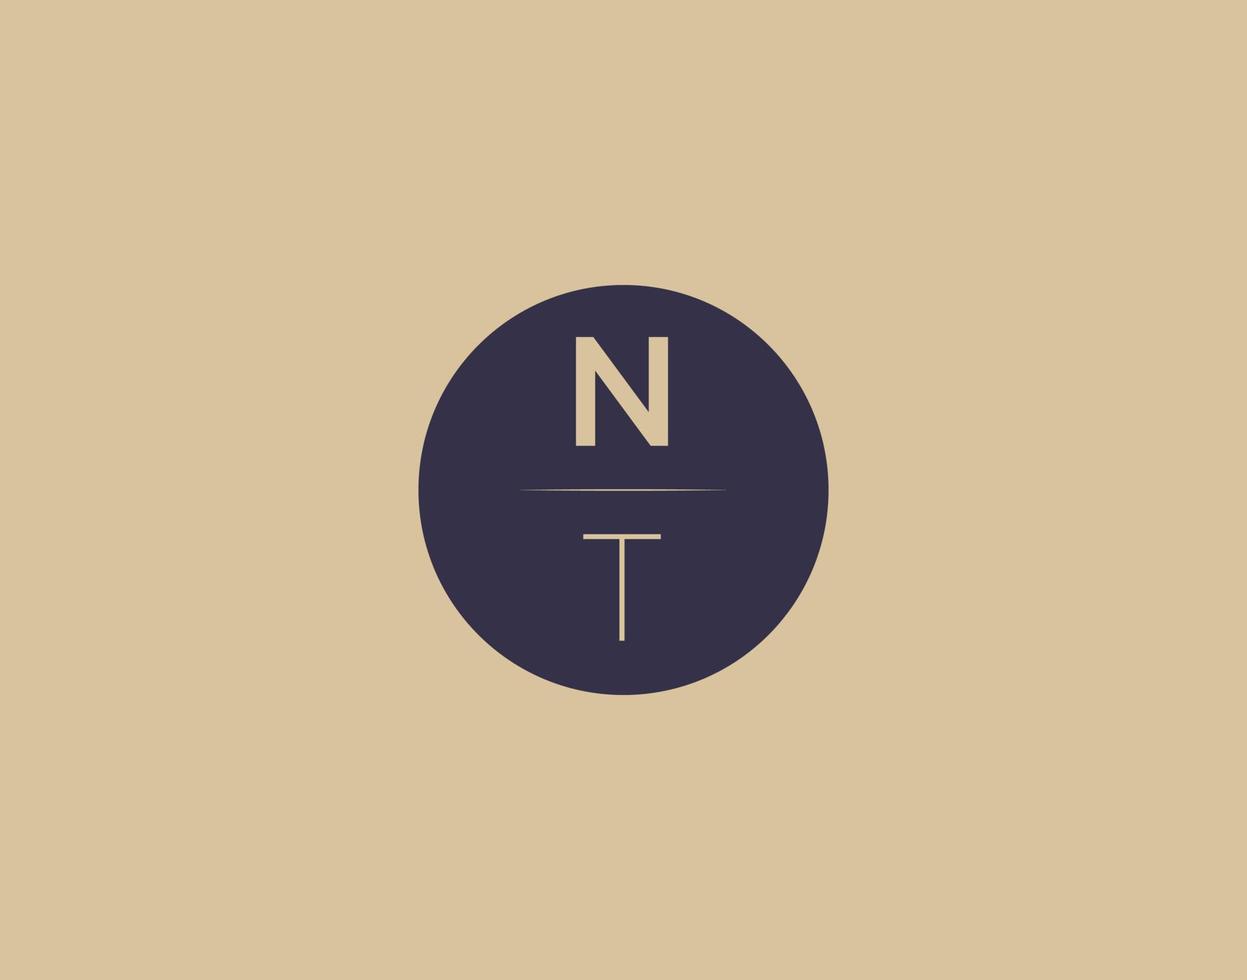 NT letter modern elegant logo design vector images